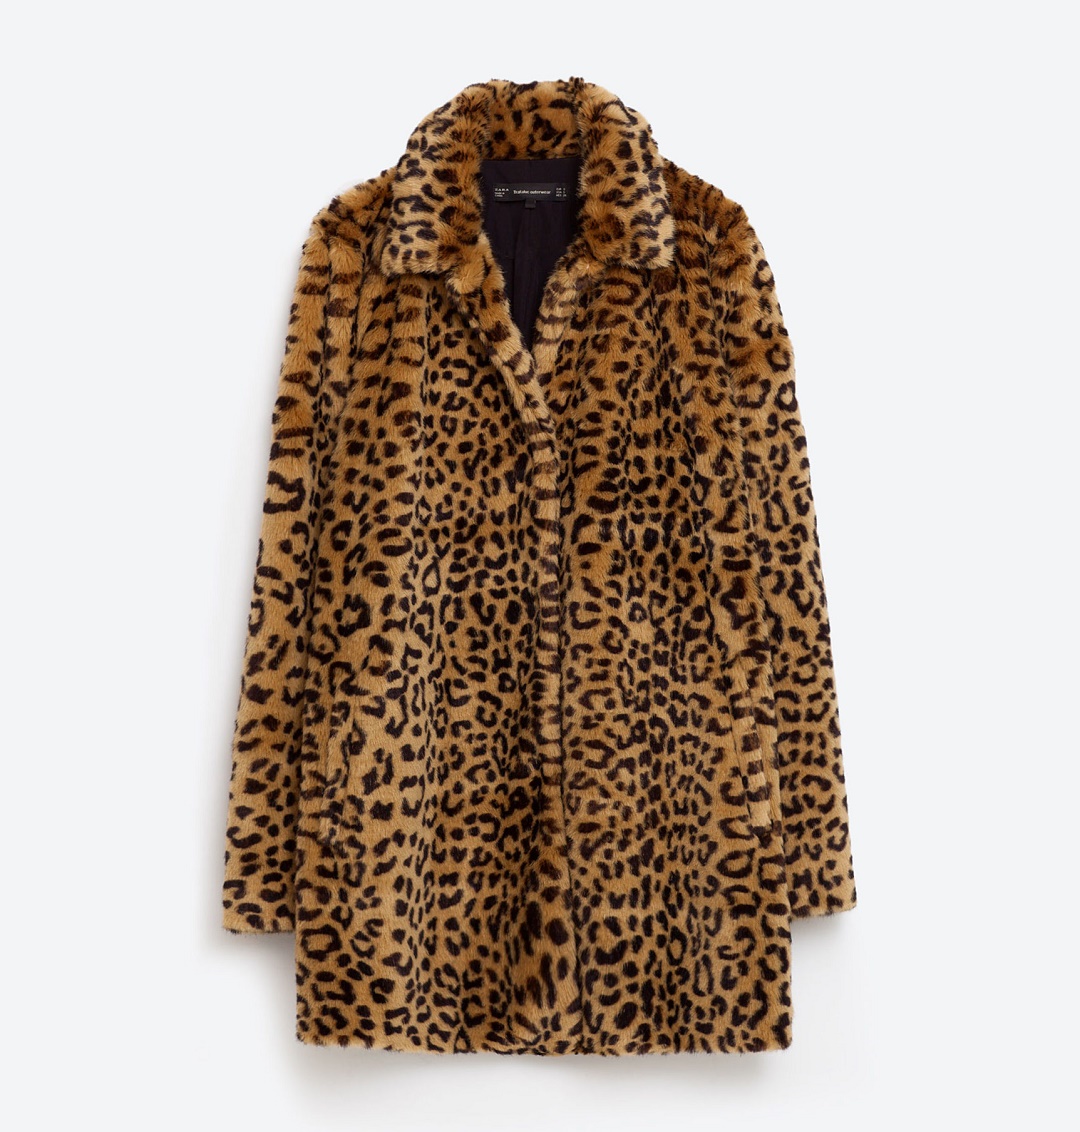 Zara leopard kaput